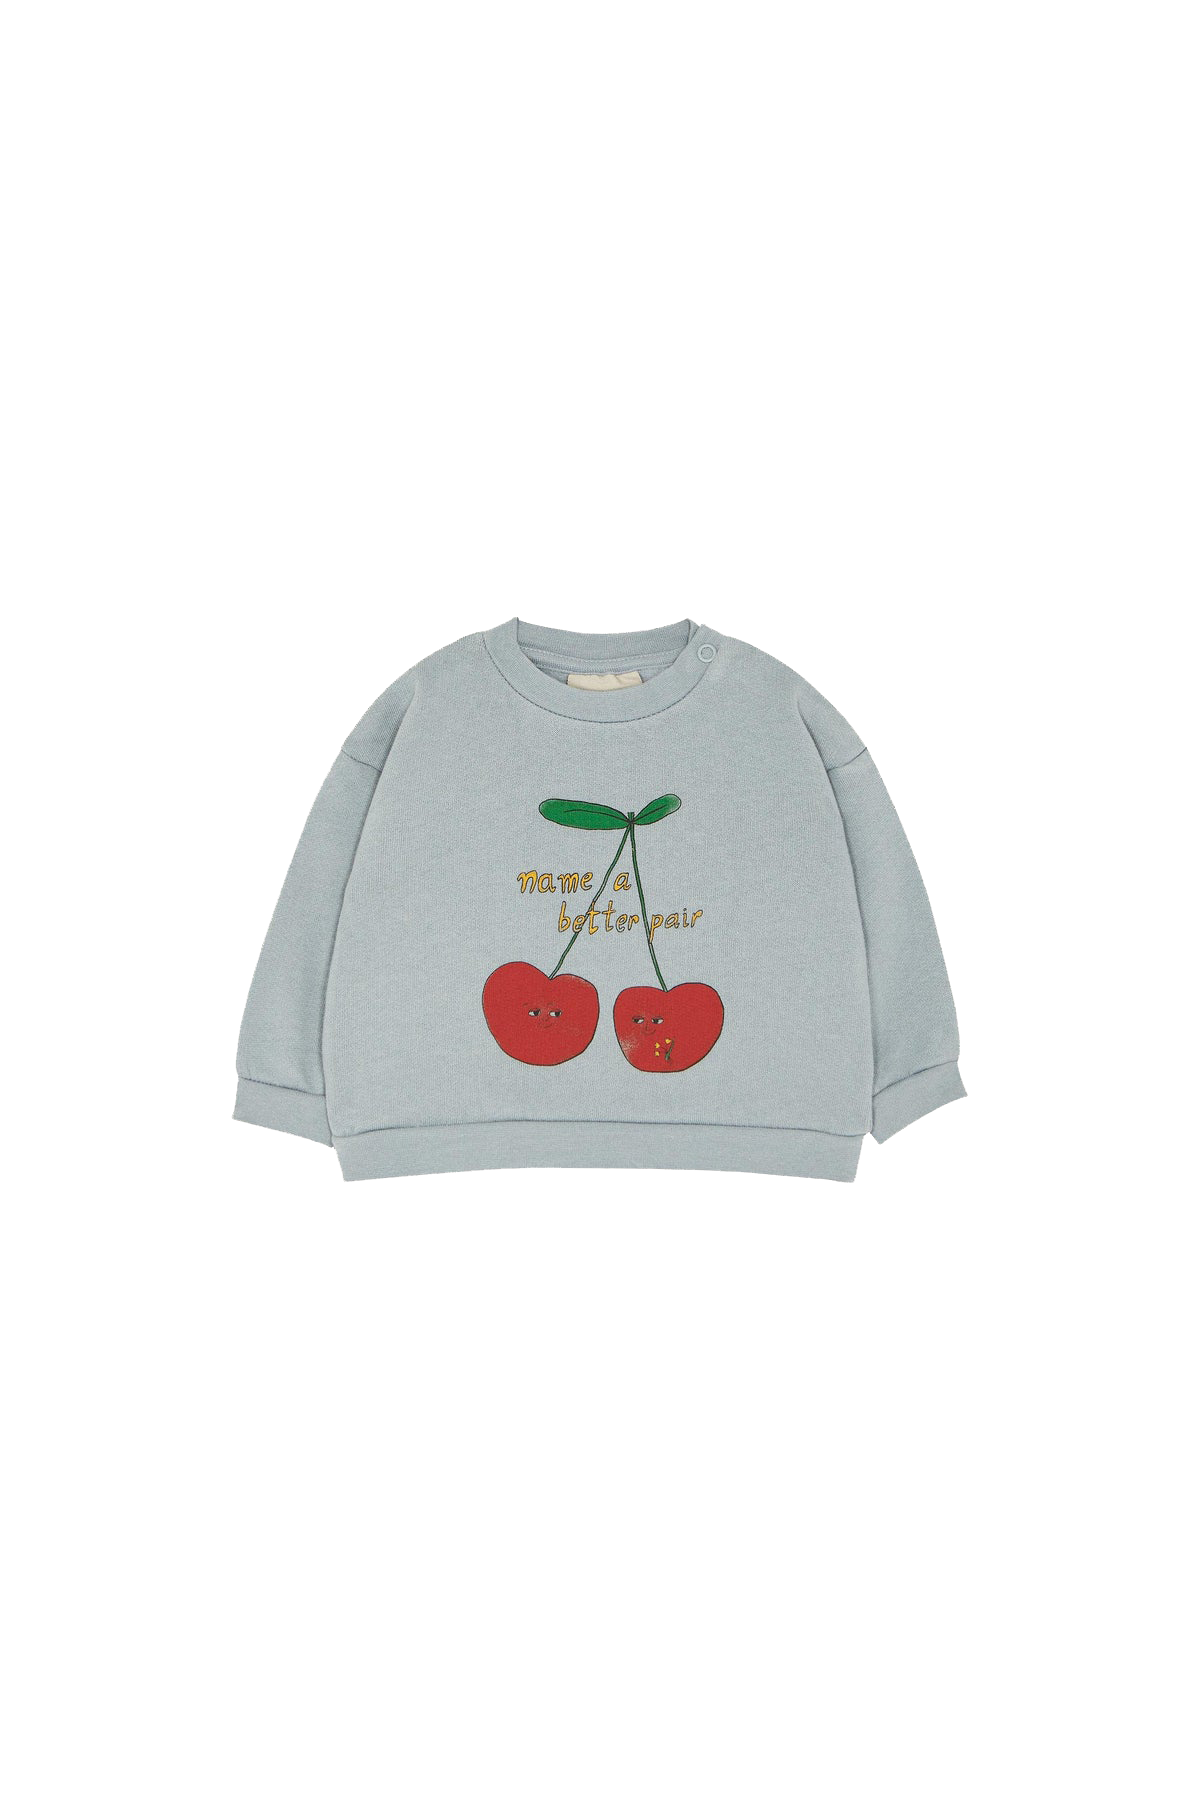 The Campamento Cherries baby sweatshirt